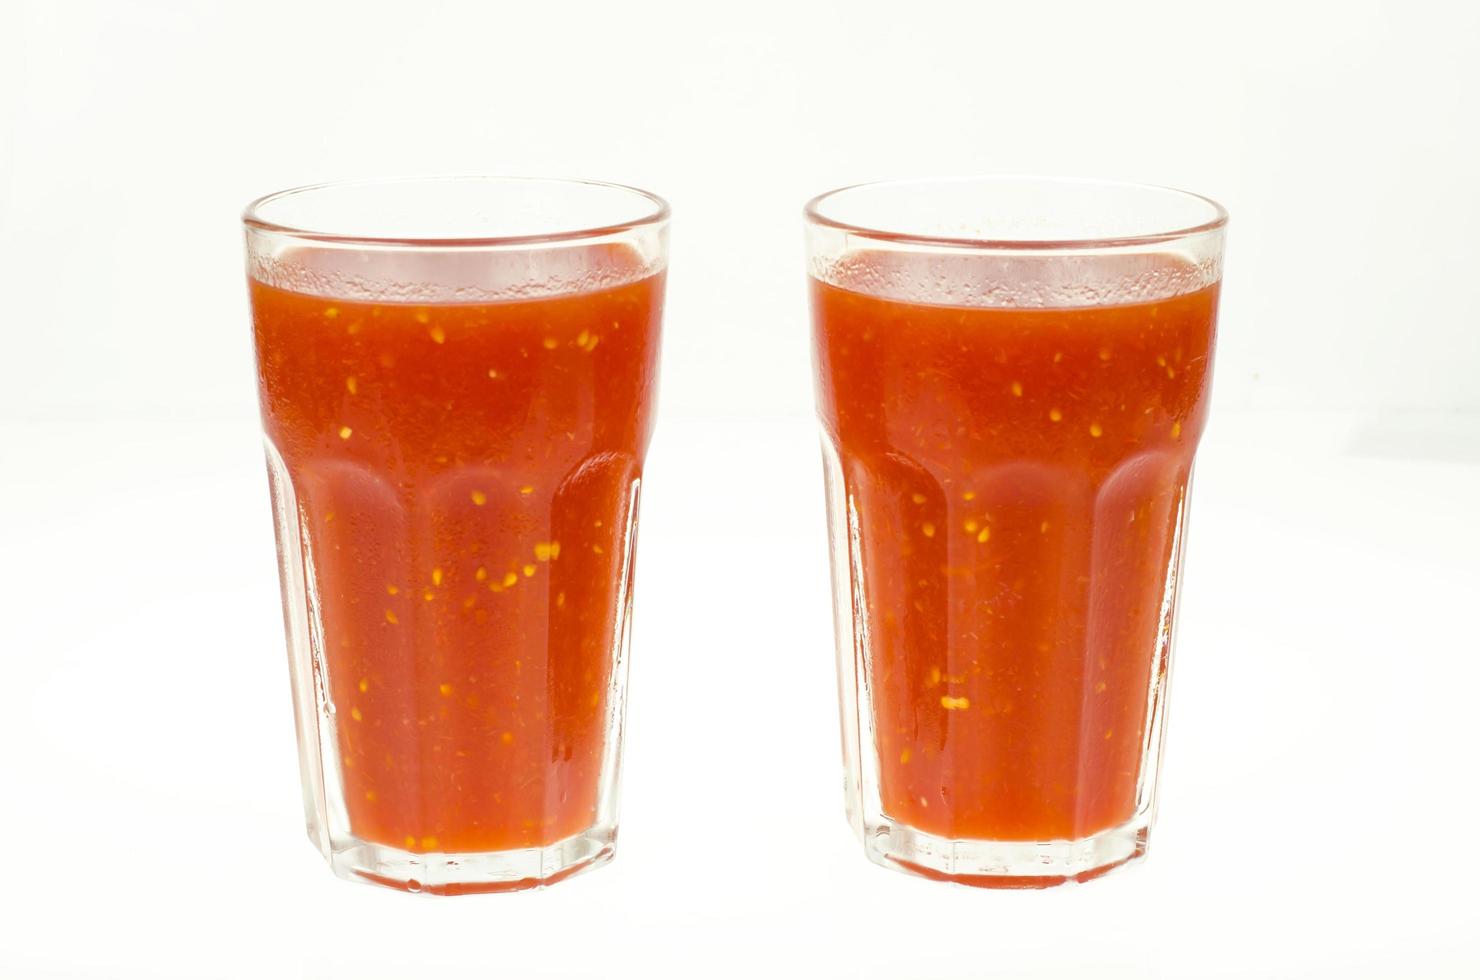 naturlig tomatjuice i glas på vit bakgrund. foto